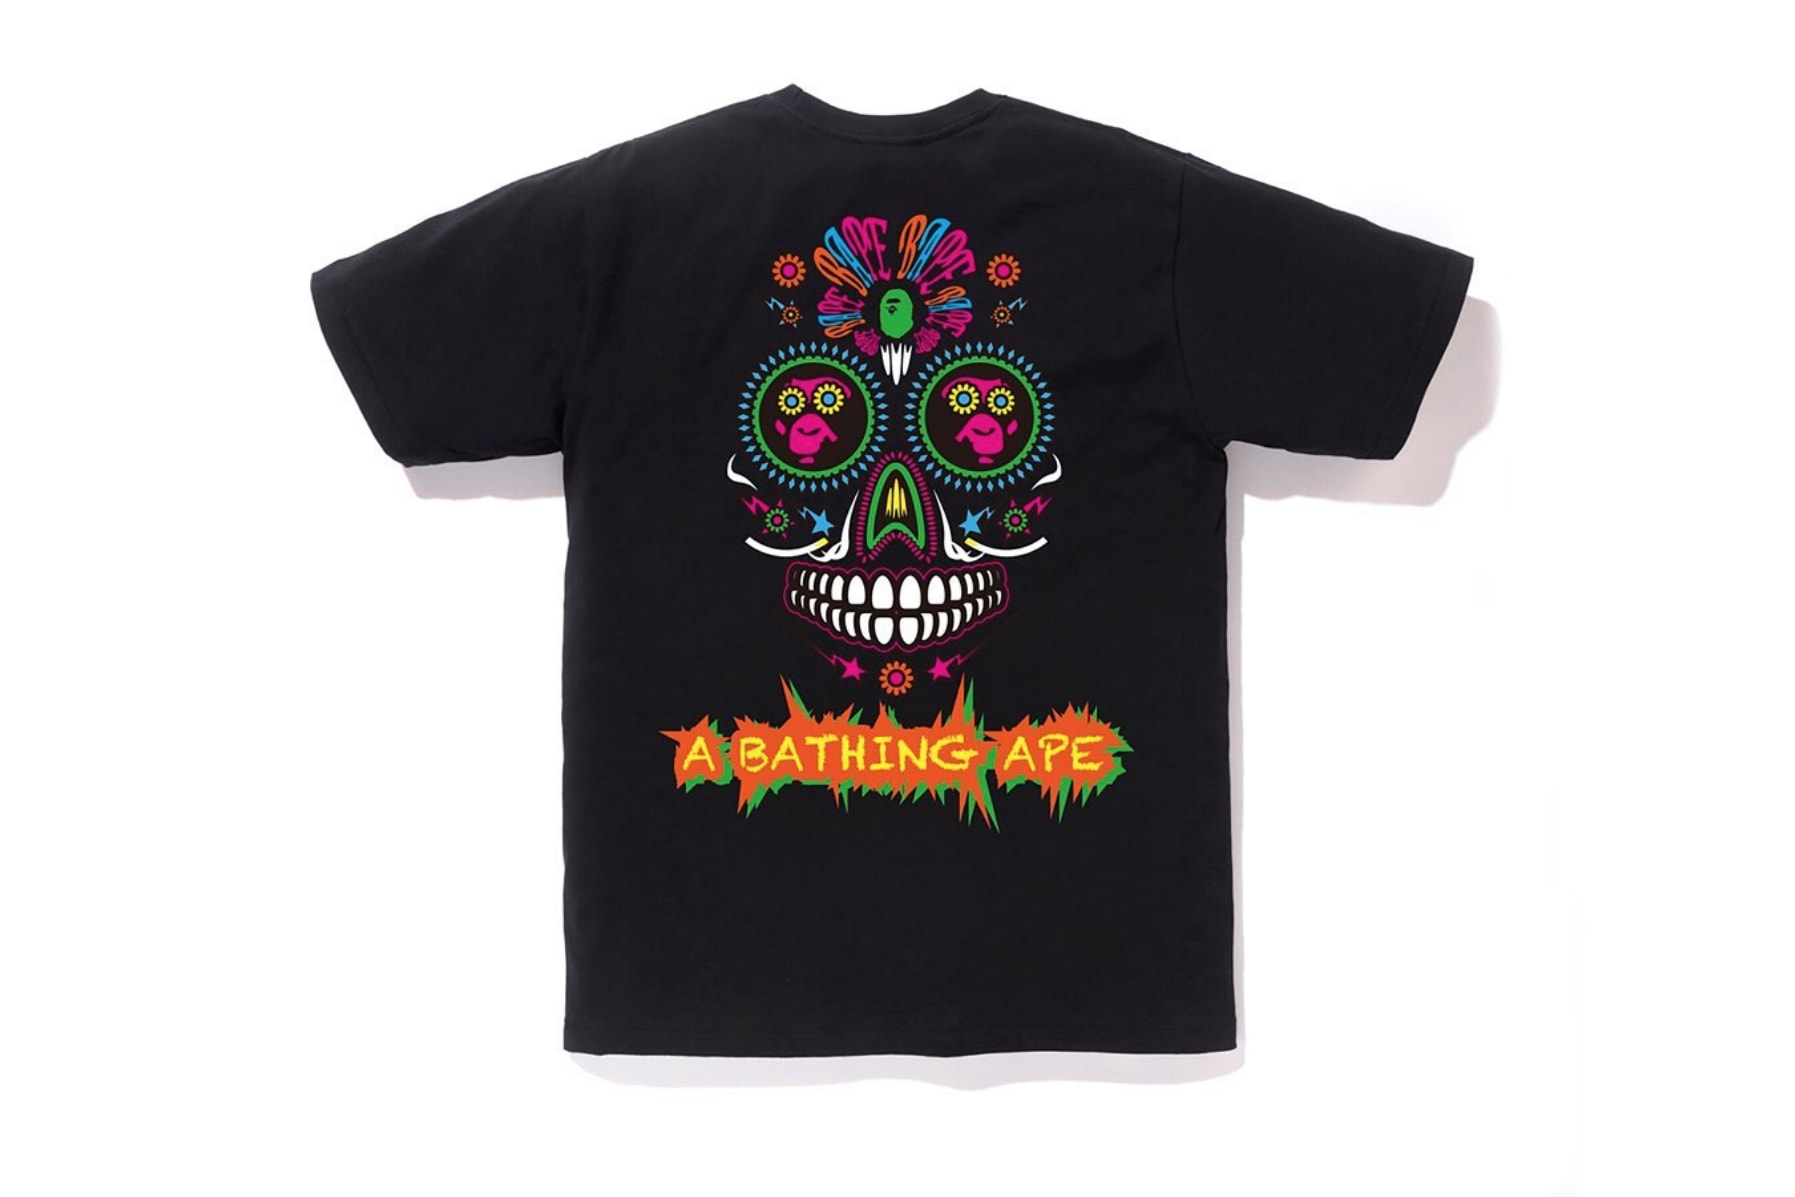 BAPE Sugar Skull "Day of the Dead" Tees a bathing ape black white t-shirts release info halloween Dias De Los Muertos ape head 